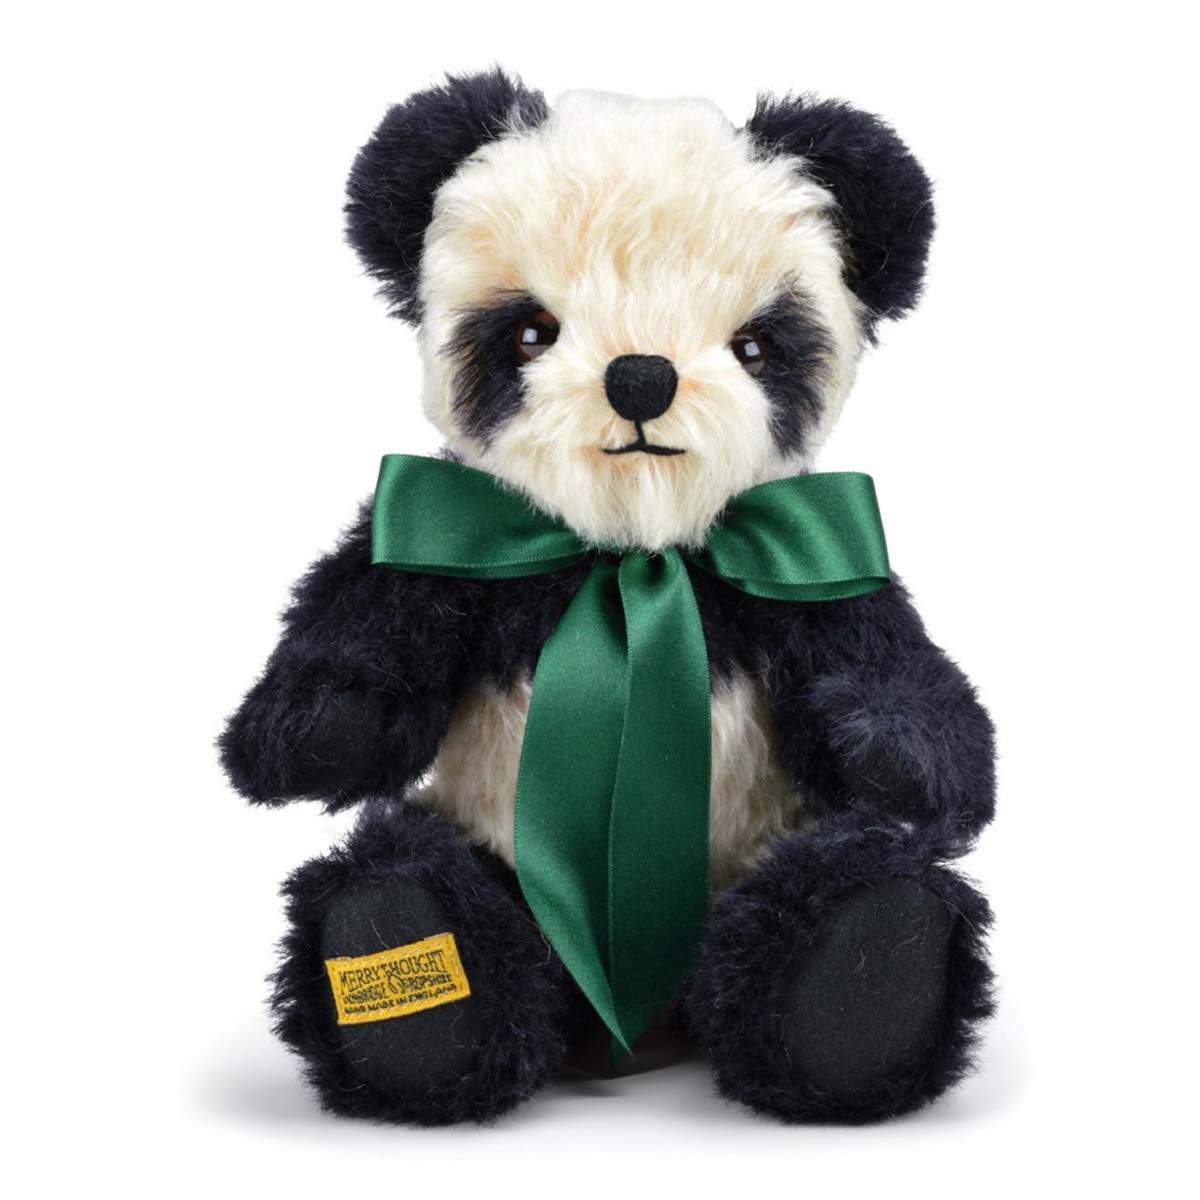 Merrythought Antique Panda Teddy Bear